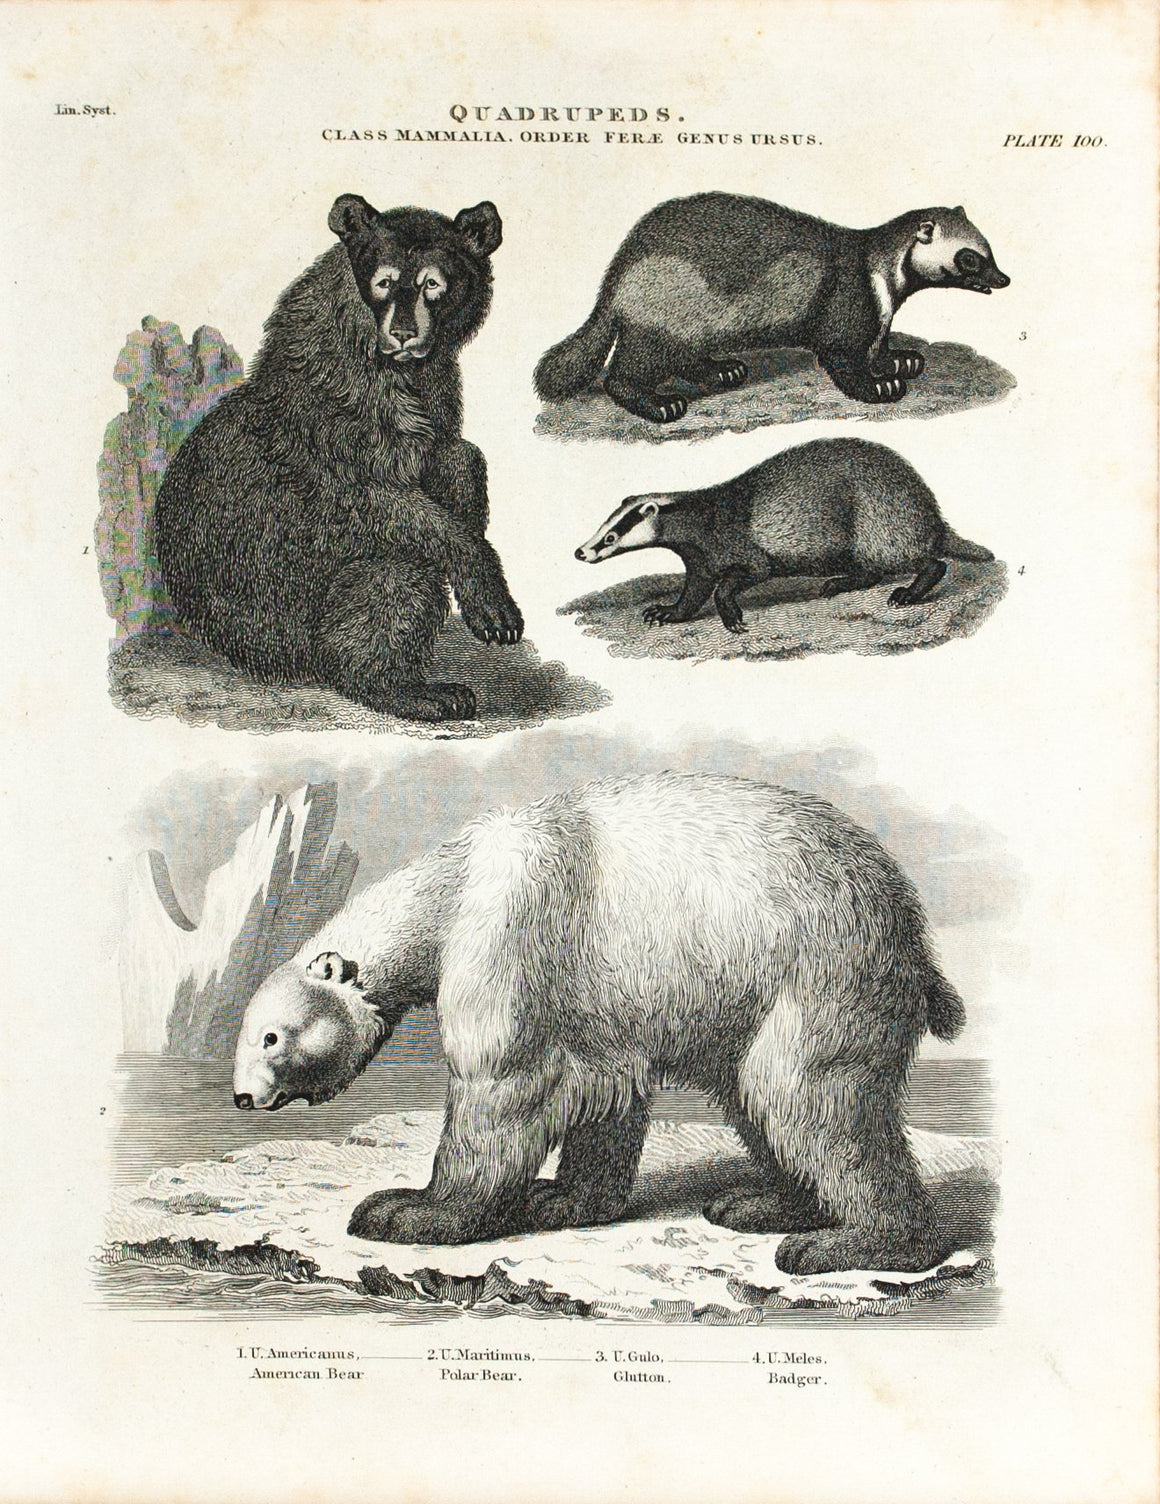 Polar Bear American Glutton Badger Antique Animal Print 1834